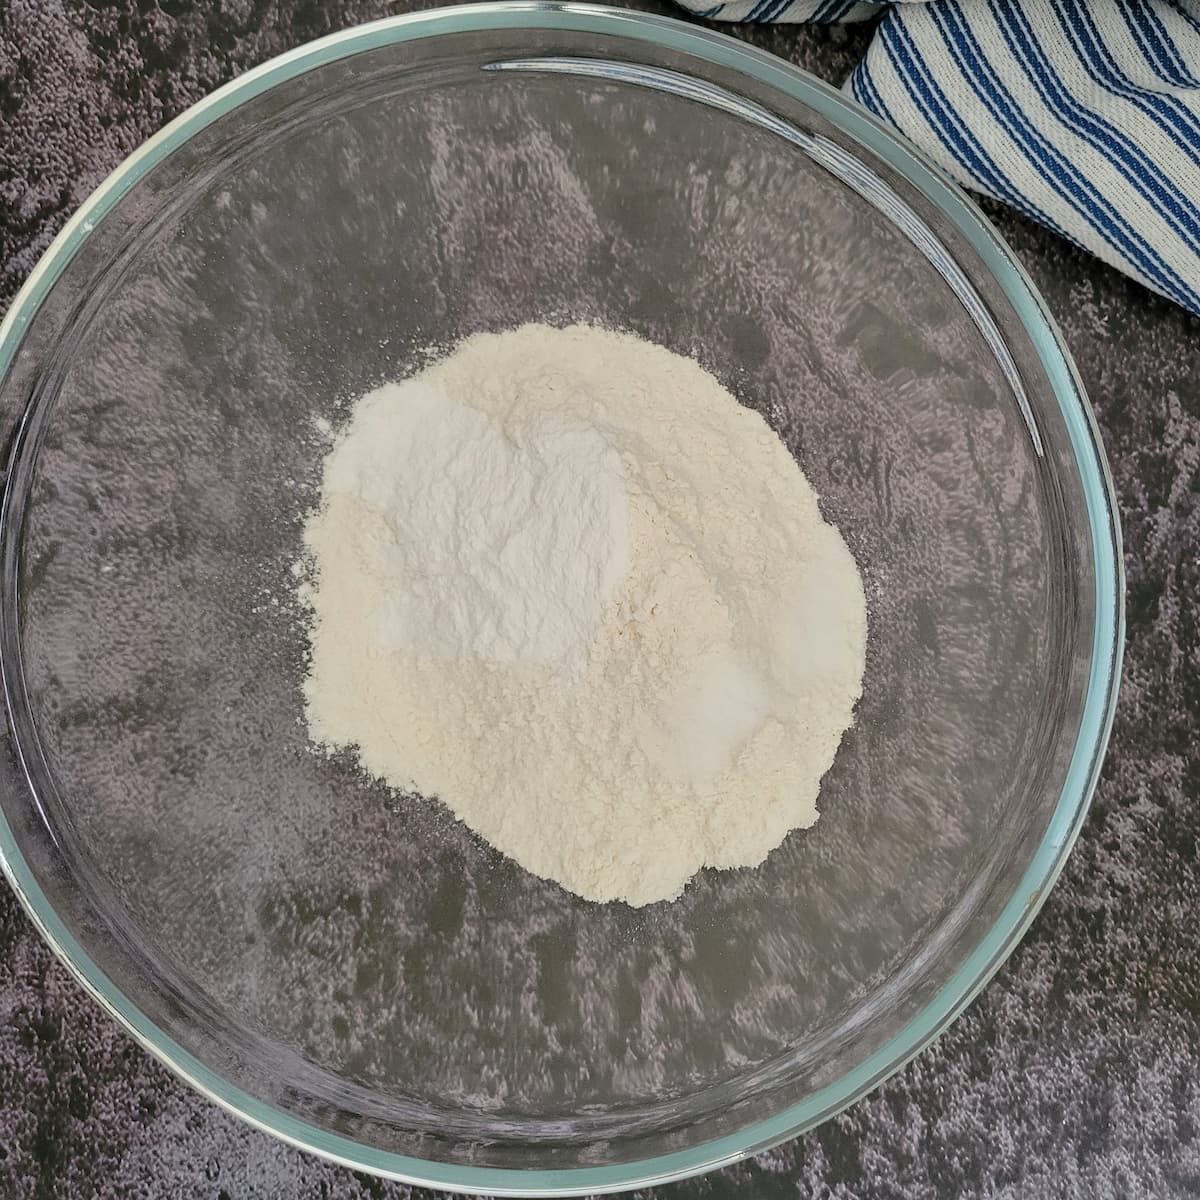 baking soda, salt and flour in a bowl - recipe for self rising flour